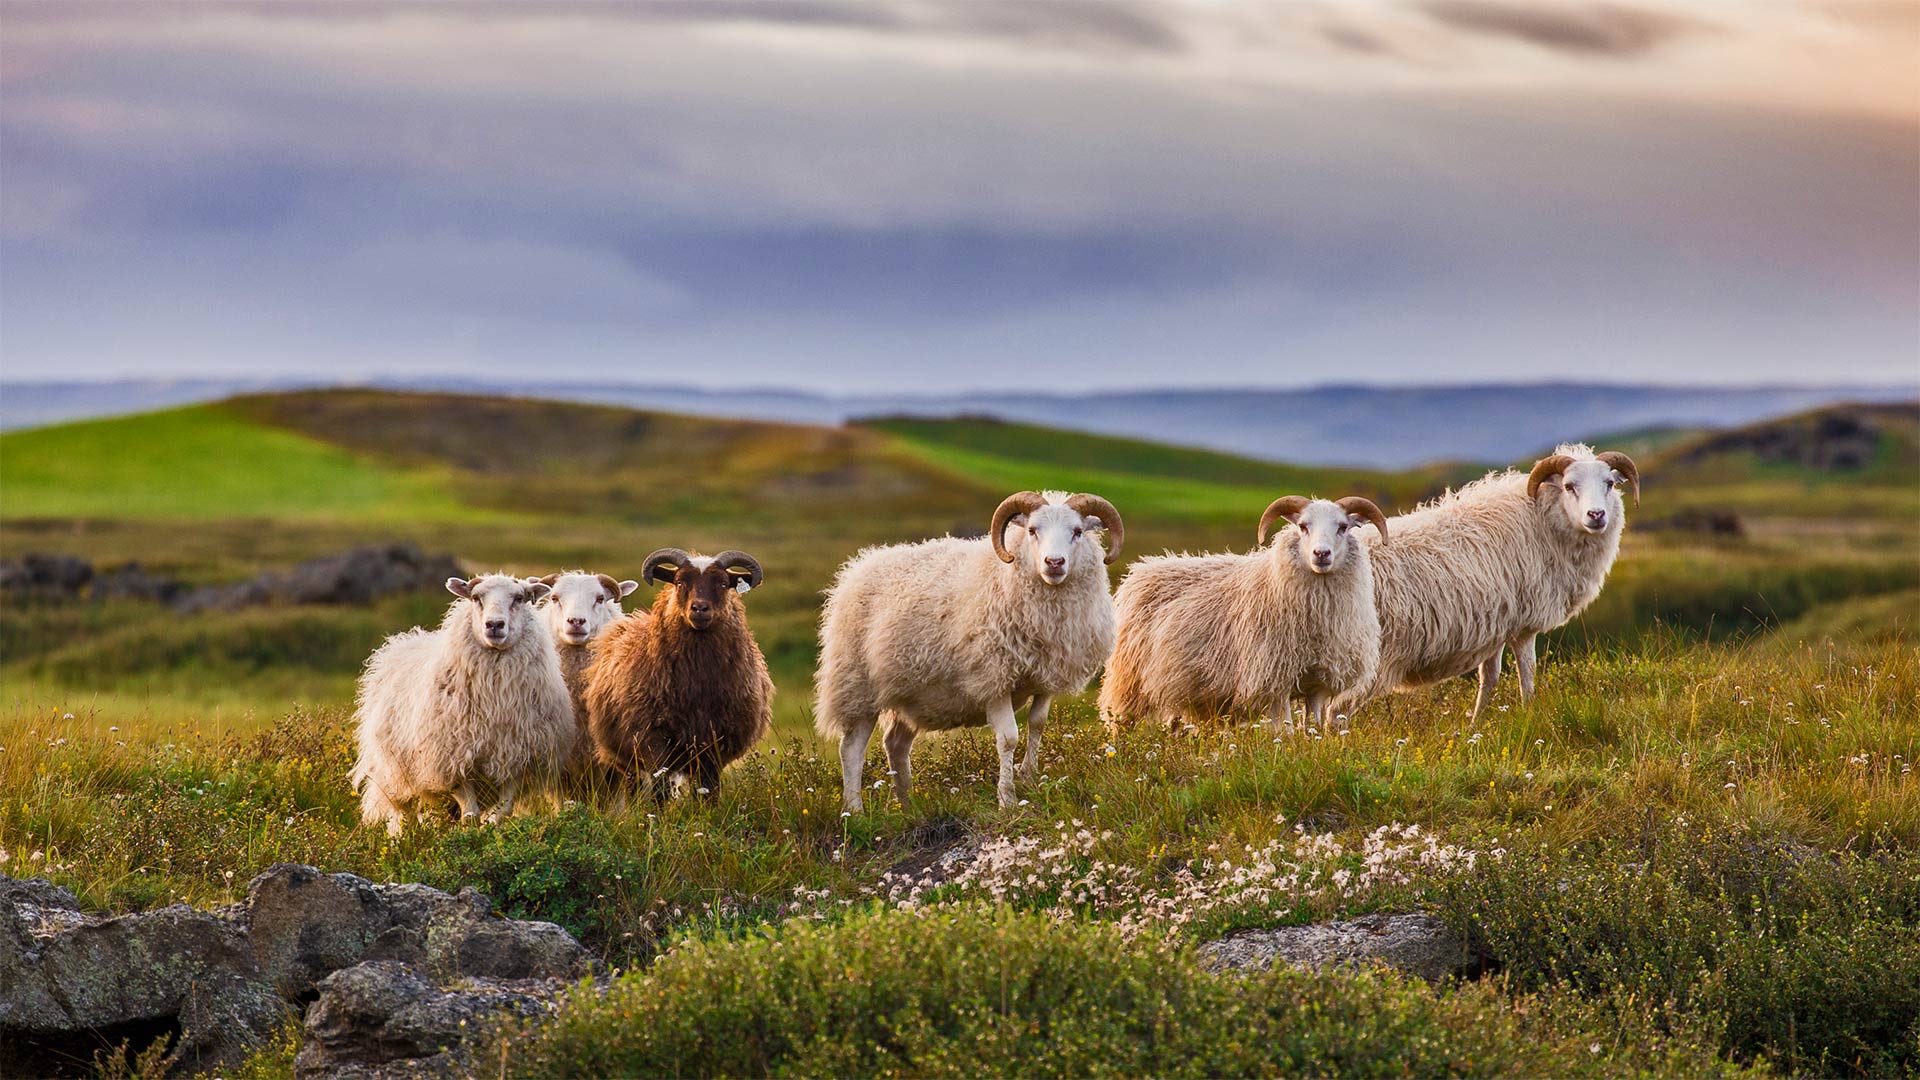 Icelandic sheep ready for réttir - Pieter Tytgat/Getty Images)